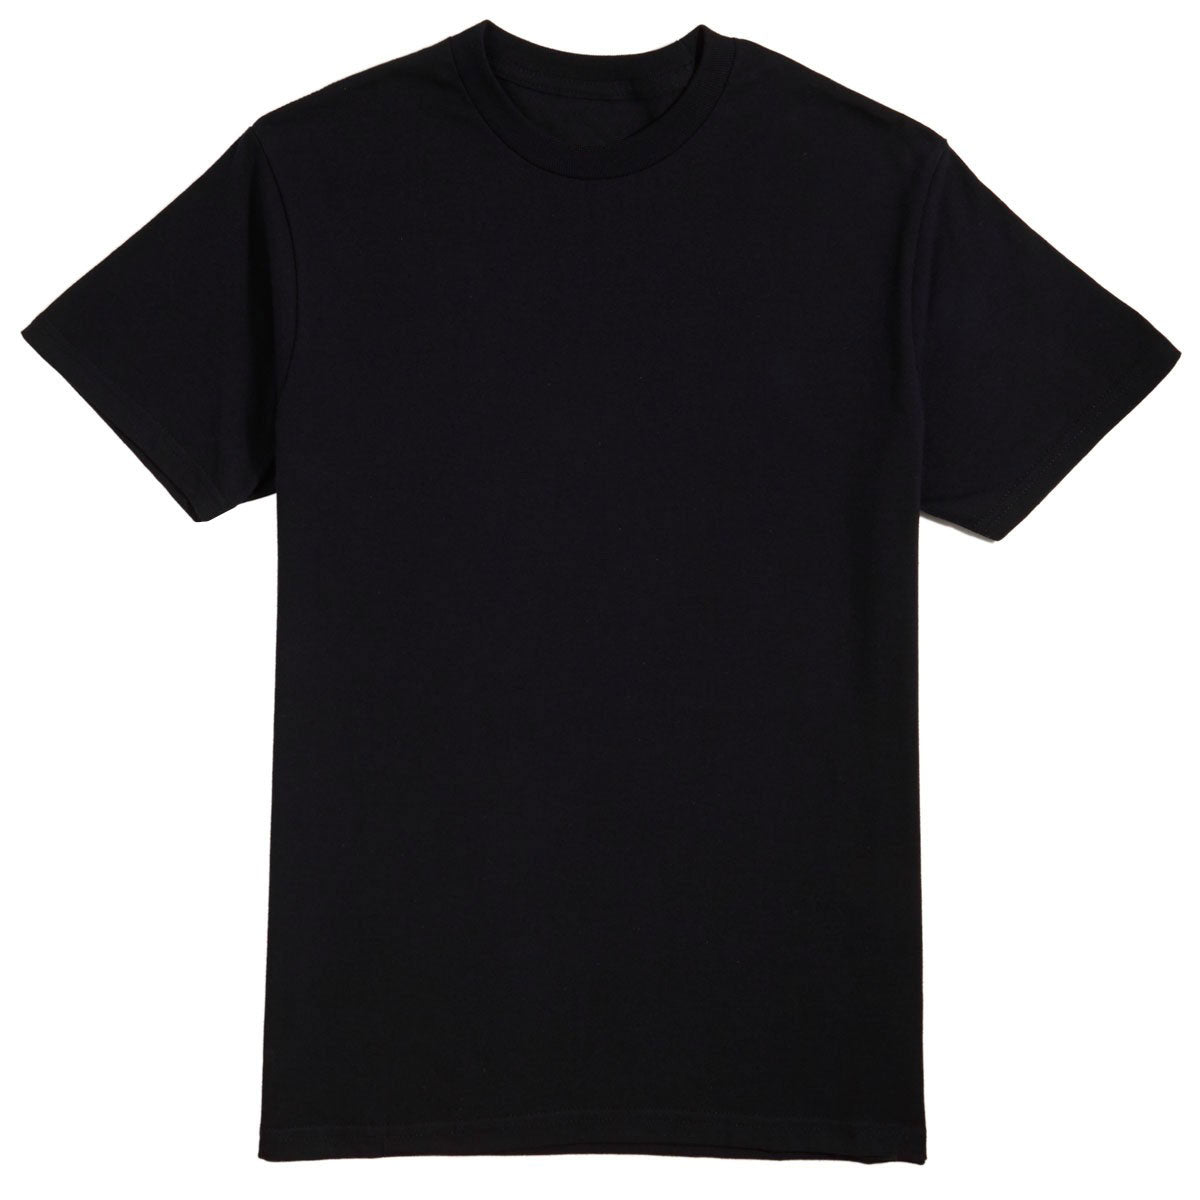 Converse Spider Web T-Shirt - Black - XL image 1